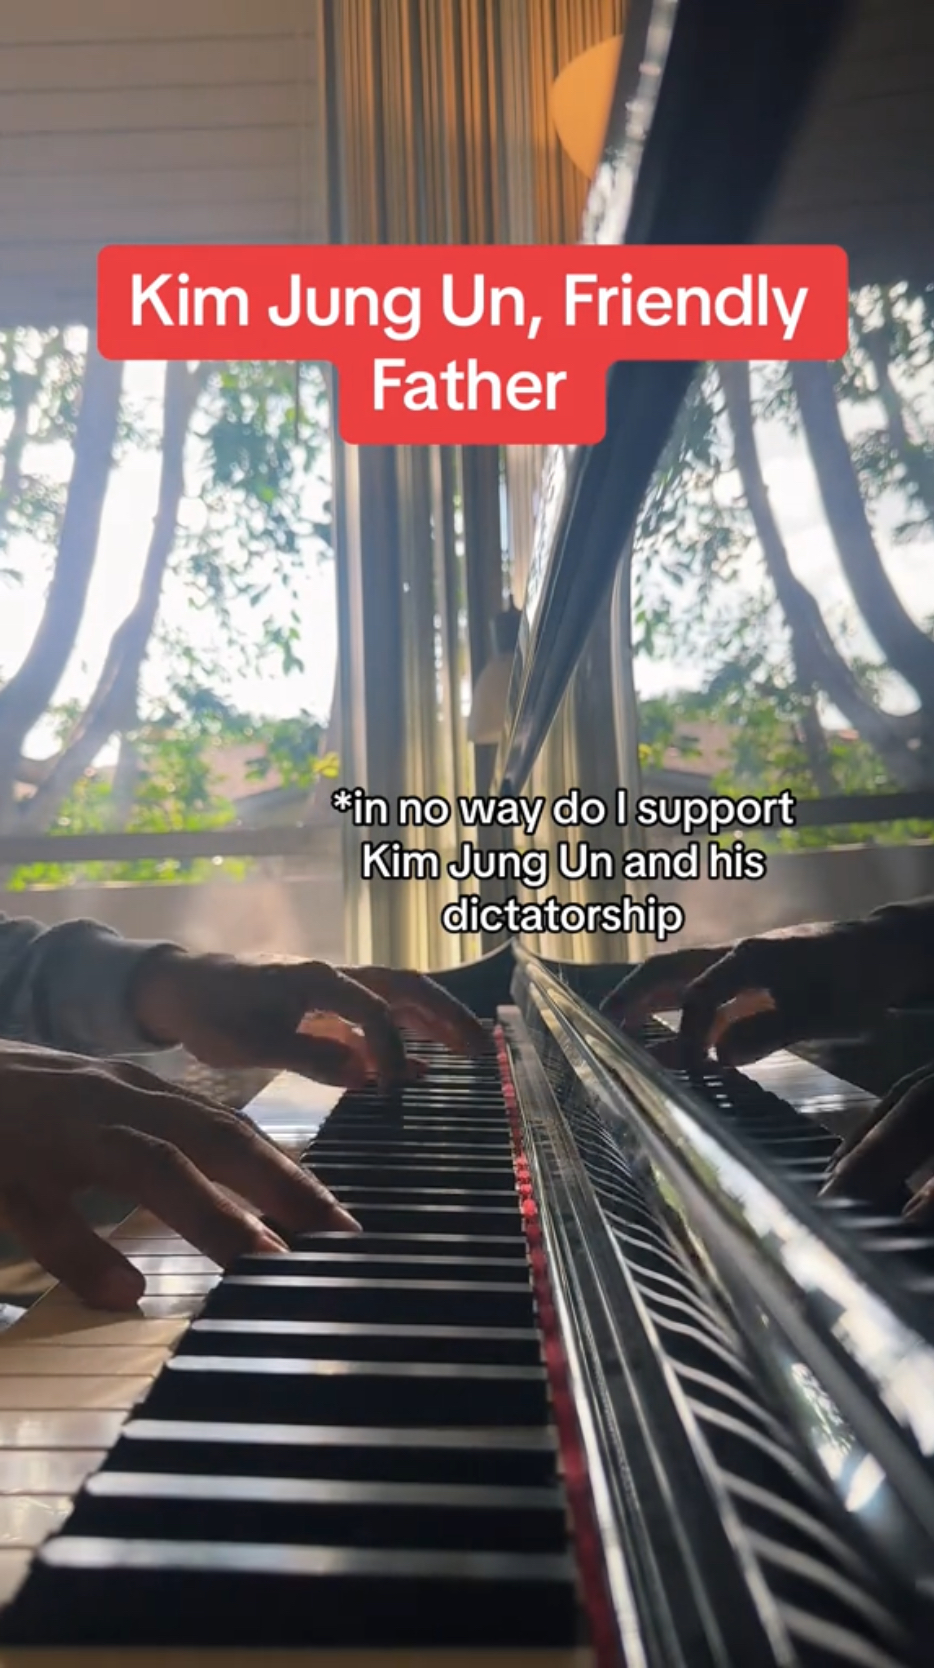 TikTok用户钢琴演奏歌颂金正恩的歌曲《友善的父亲》，还表明不是支持金正恩或其政权。